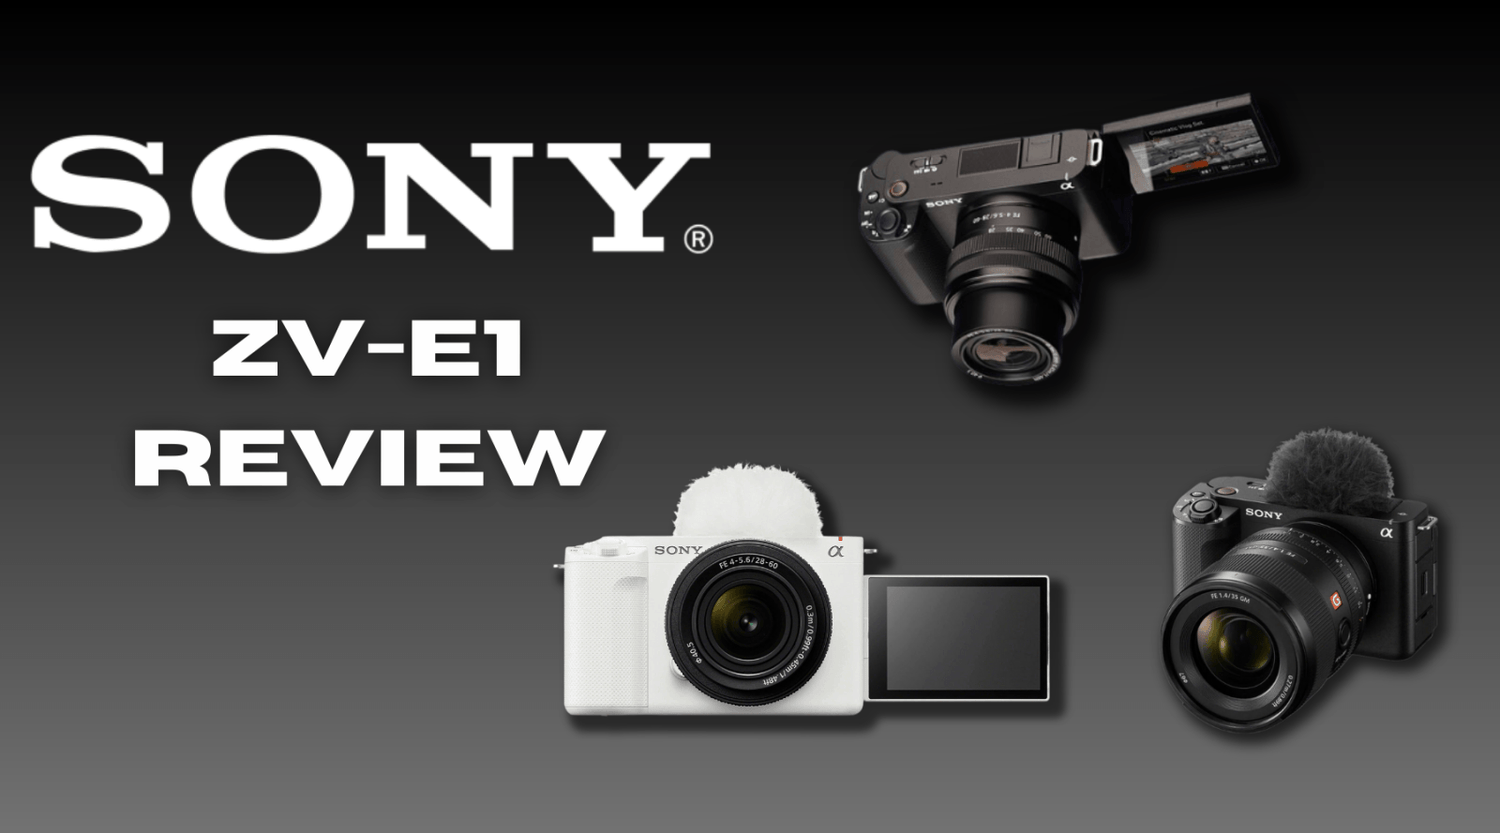 Sony ZV-E1 Review: Is Sony ZV-E1 best for vlogging?